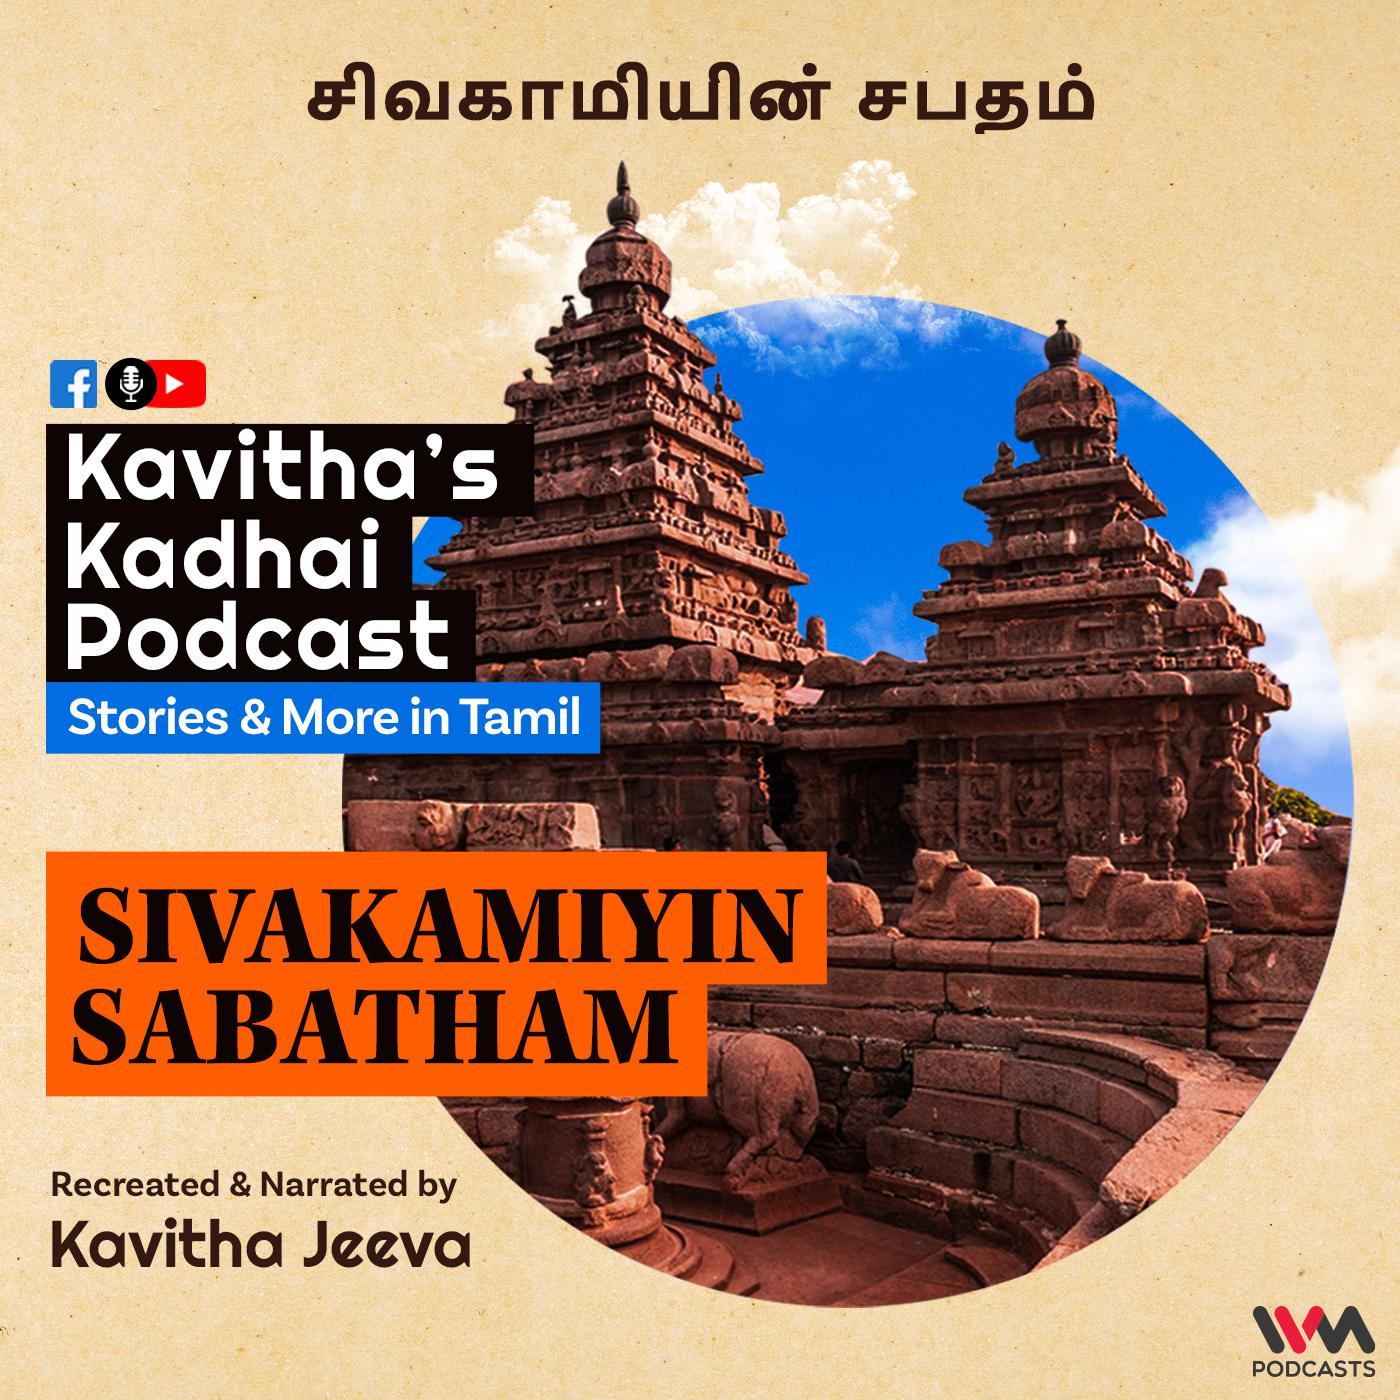 KadhaiPodcast's Sivakamiyin Sabatham with Kavitha Jeeva - Episode #106